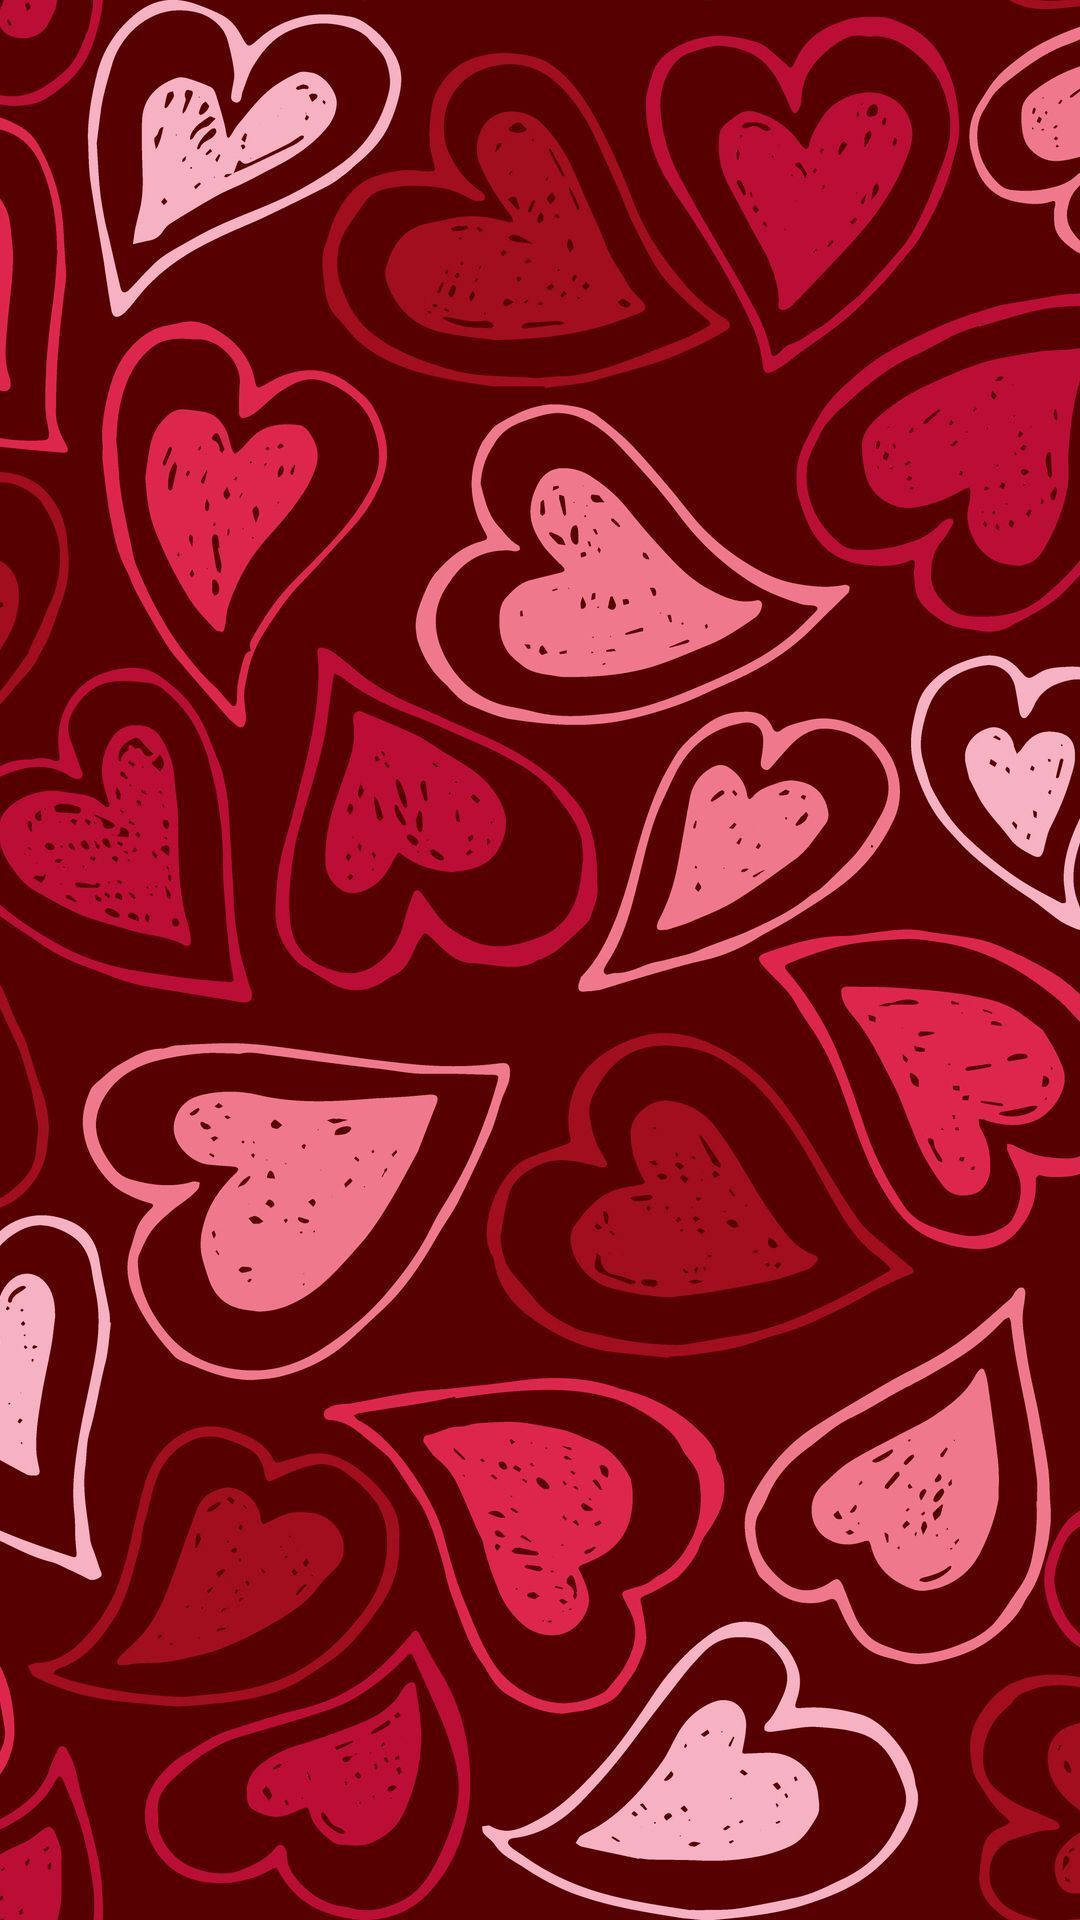 Red Curvy Wildflower Hearts